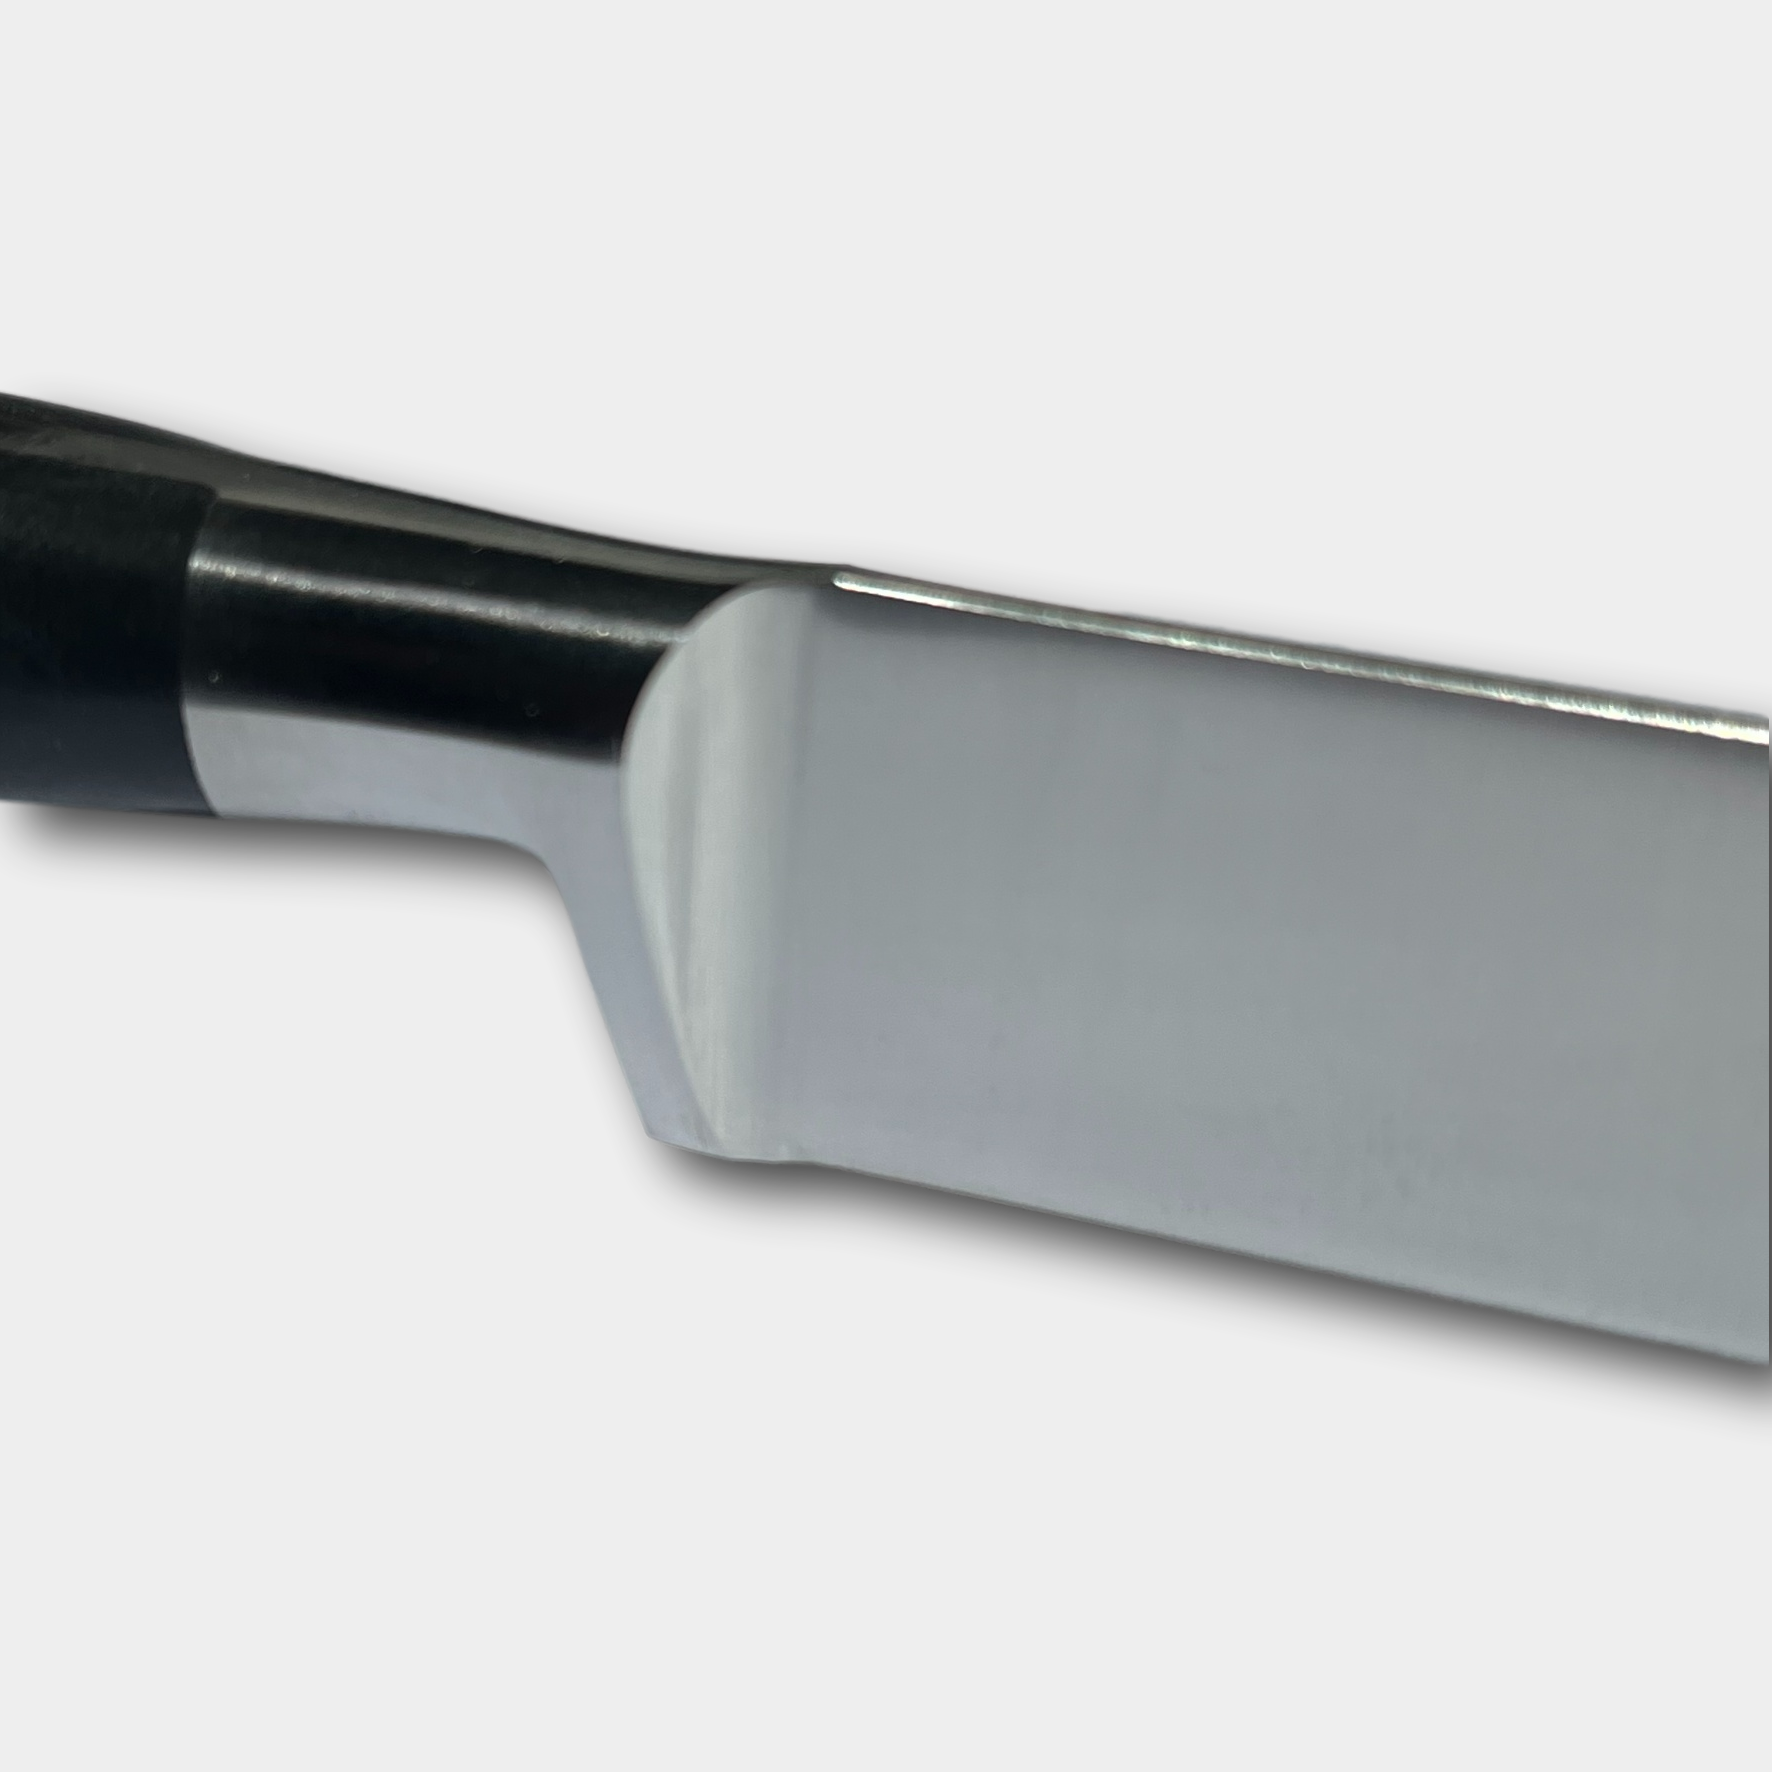 Lion Sabtier Ideal Steel 12cm Serrated Utility Knife